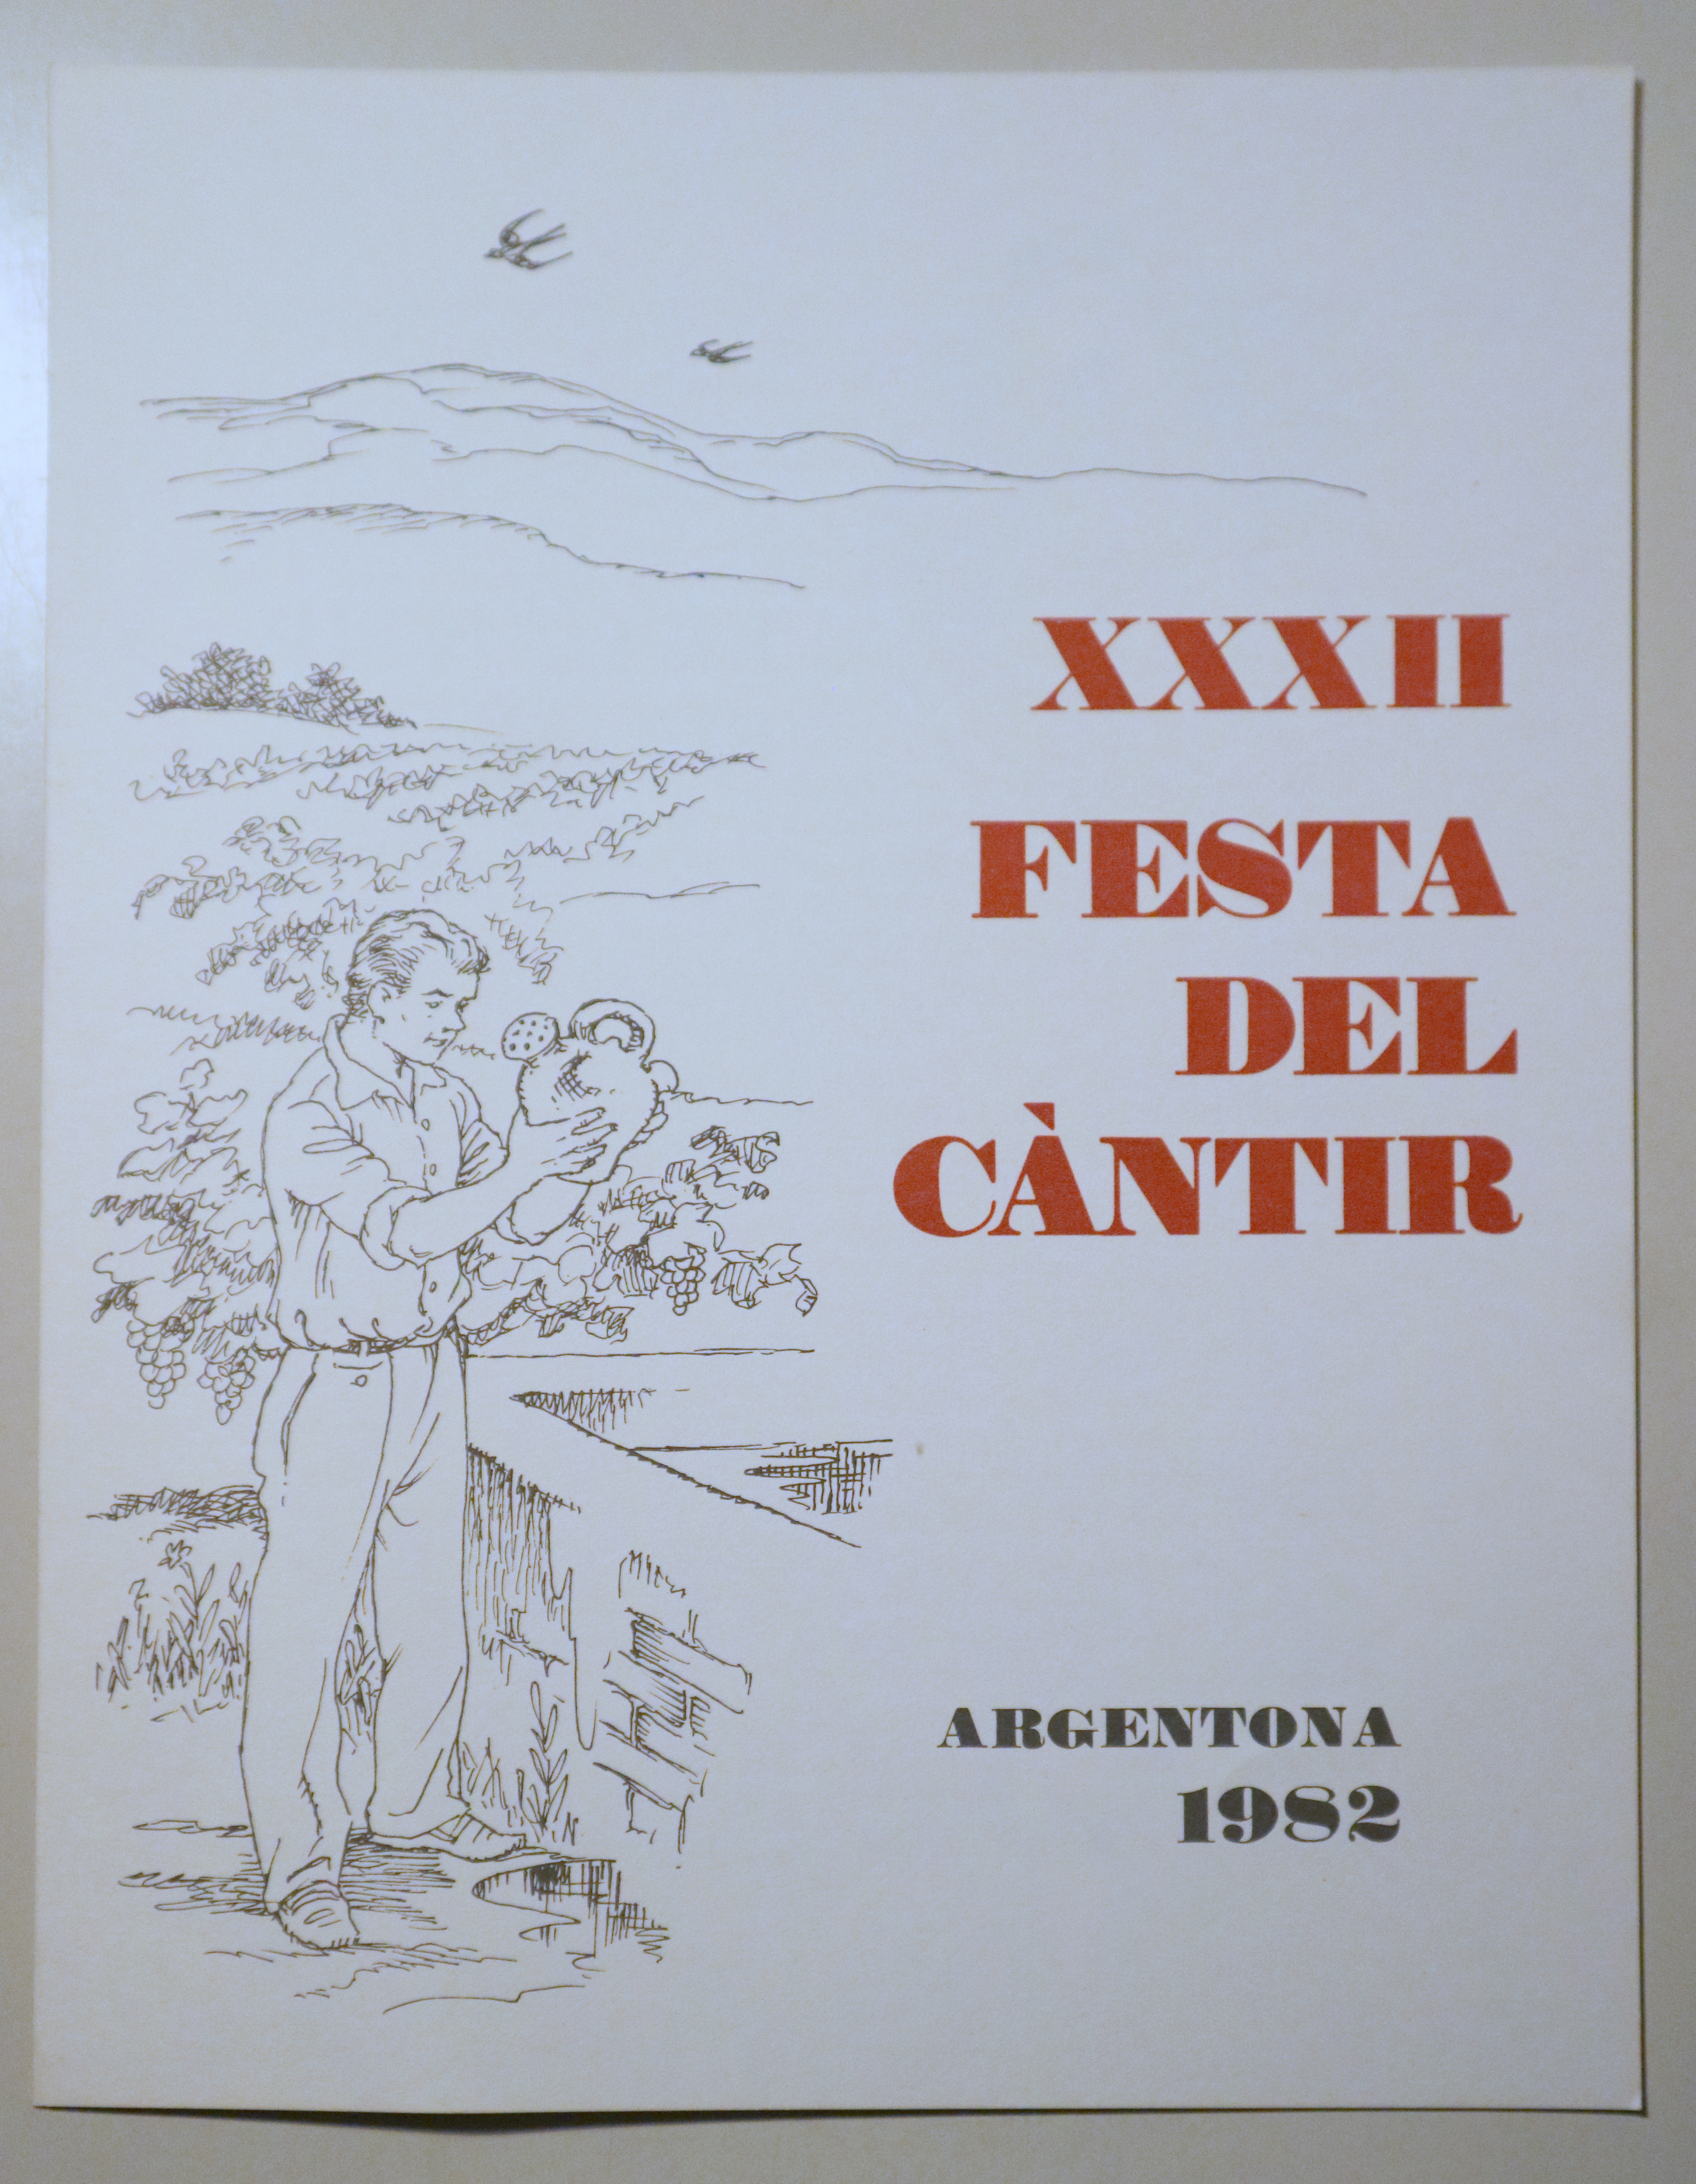 XXXII FESTA DEL CÀNTIR - Argentona 1982